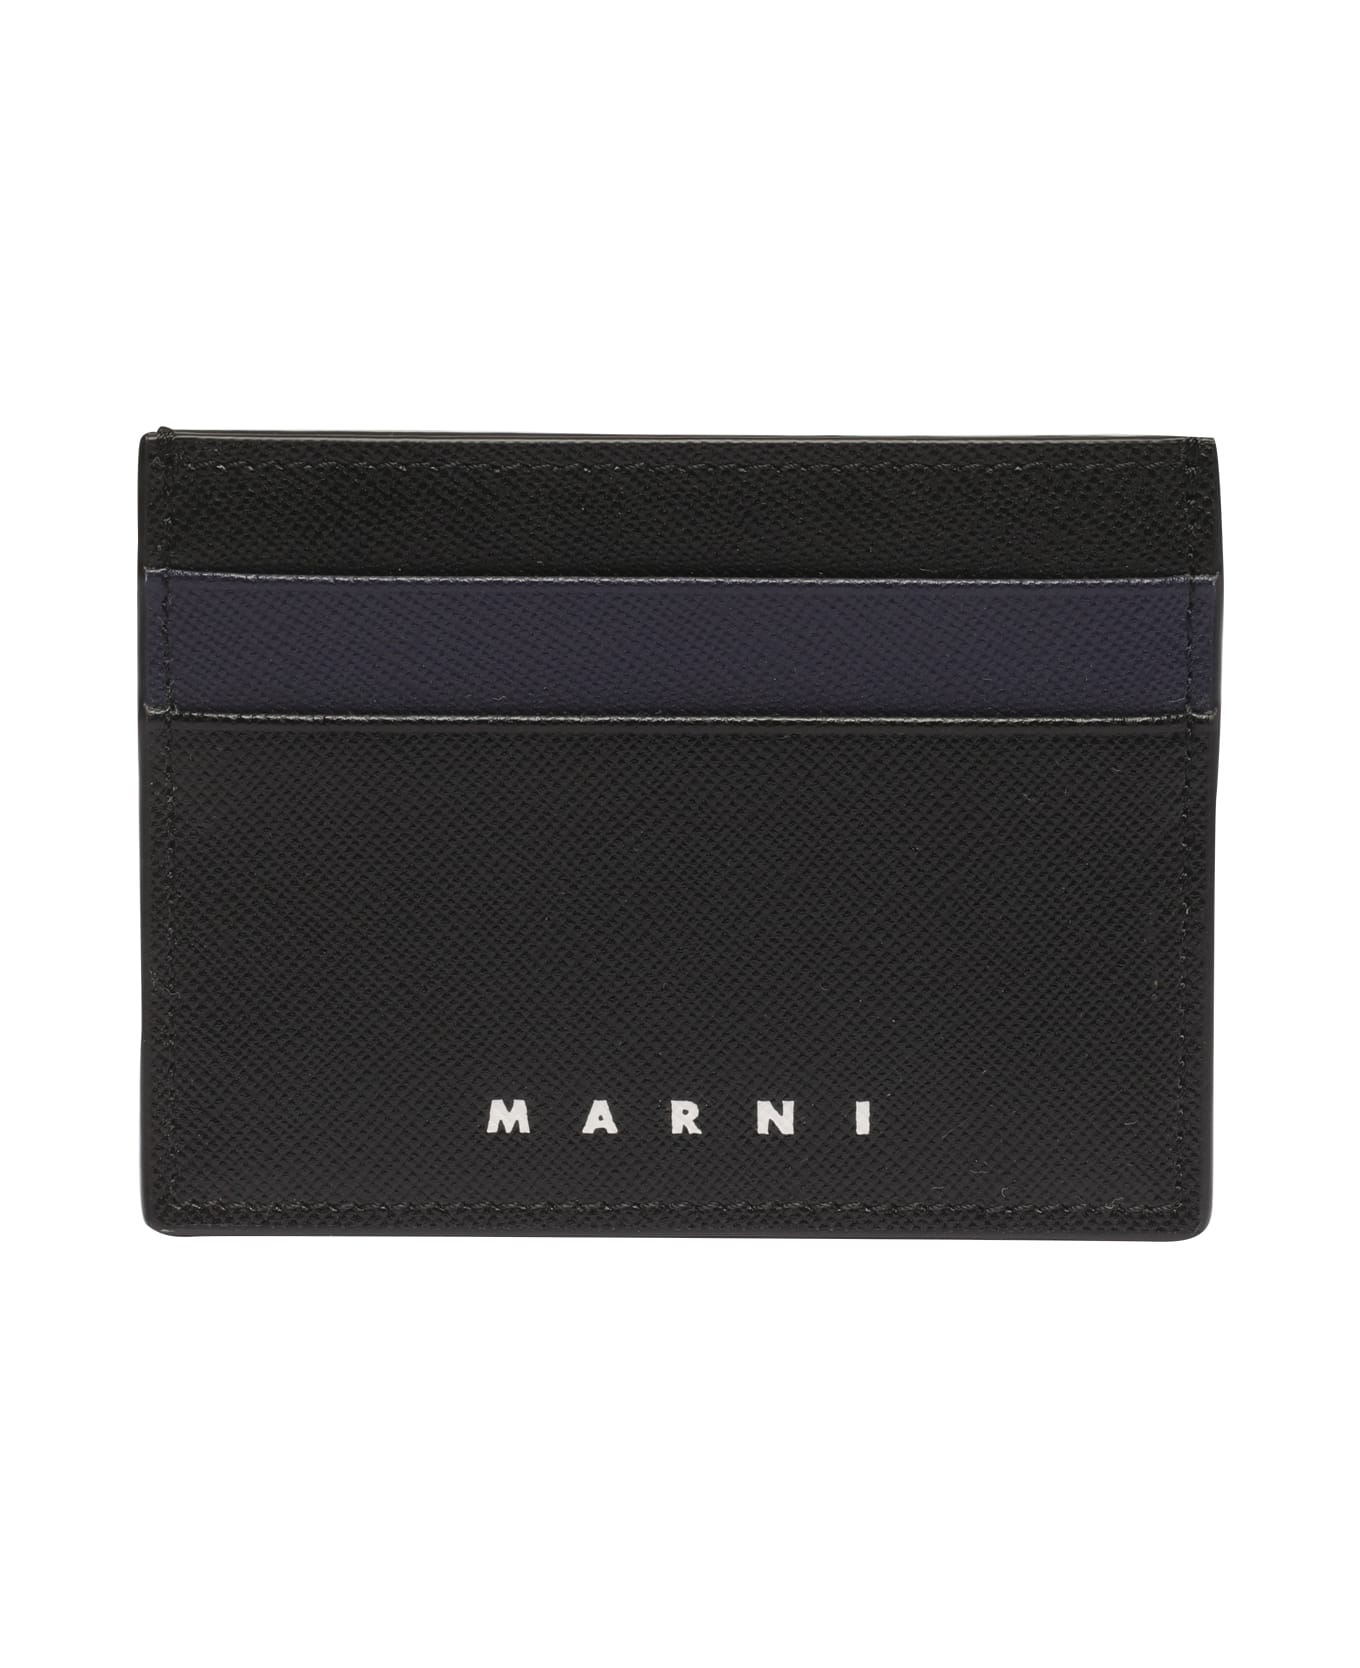 Marni Logo Cardholder - Nero